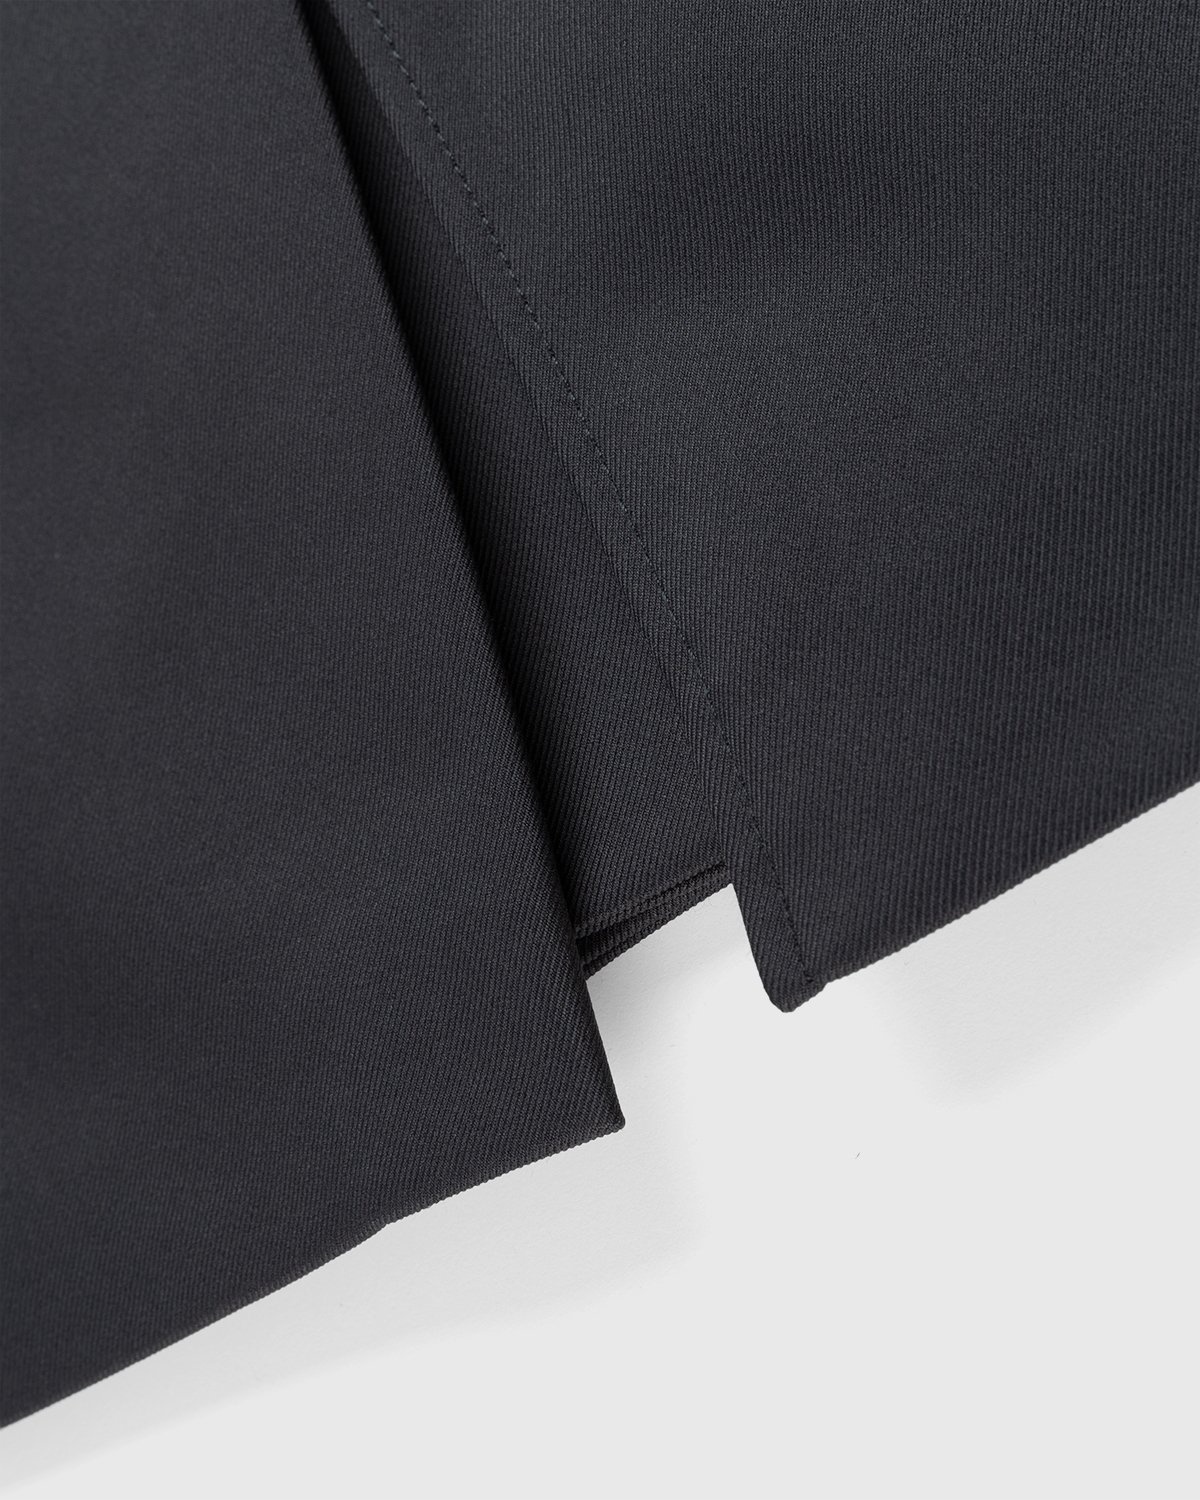 Maison Margiela – Memory Of Twill Coat Dark Grey - Outerwear - Grey - Image 6